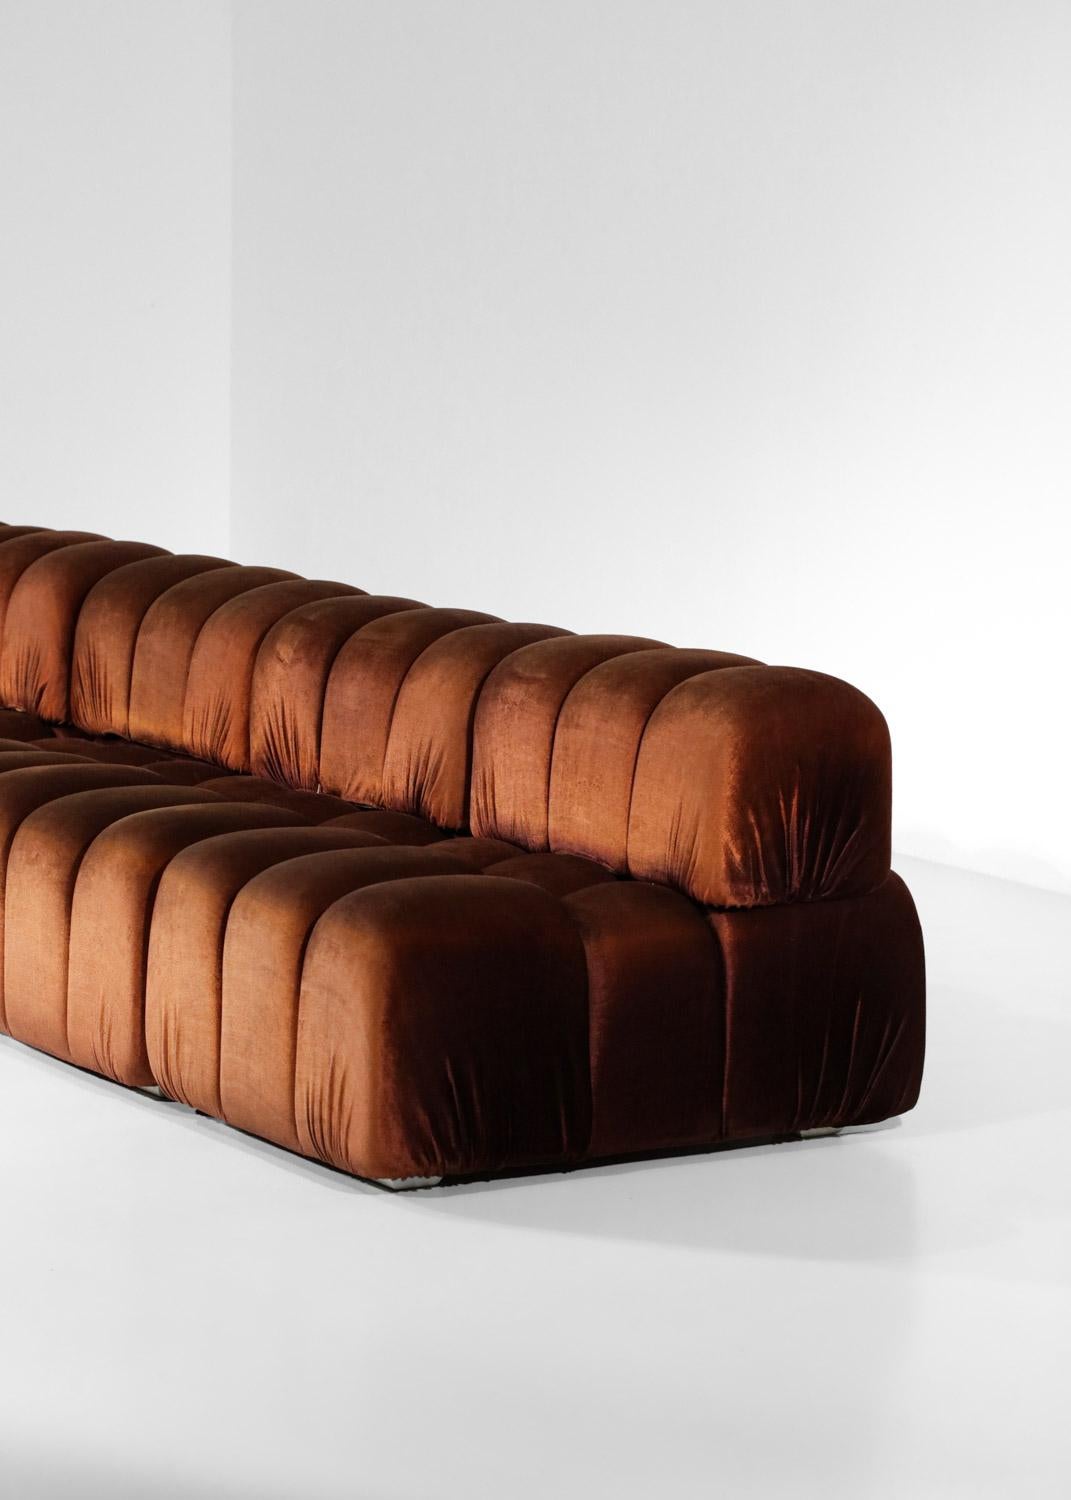 Italian sofa 5 modules 70s in style of Mario Bellini heater midcentury design 10